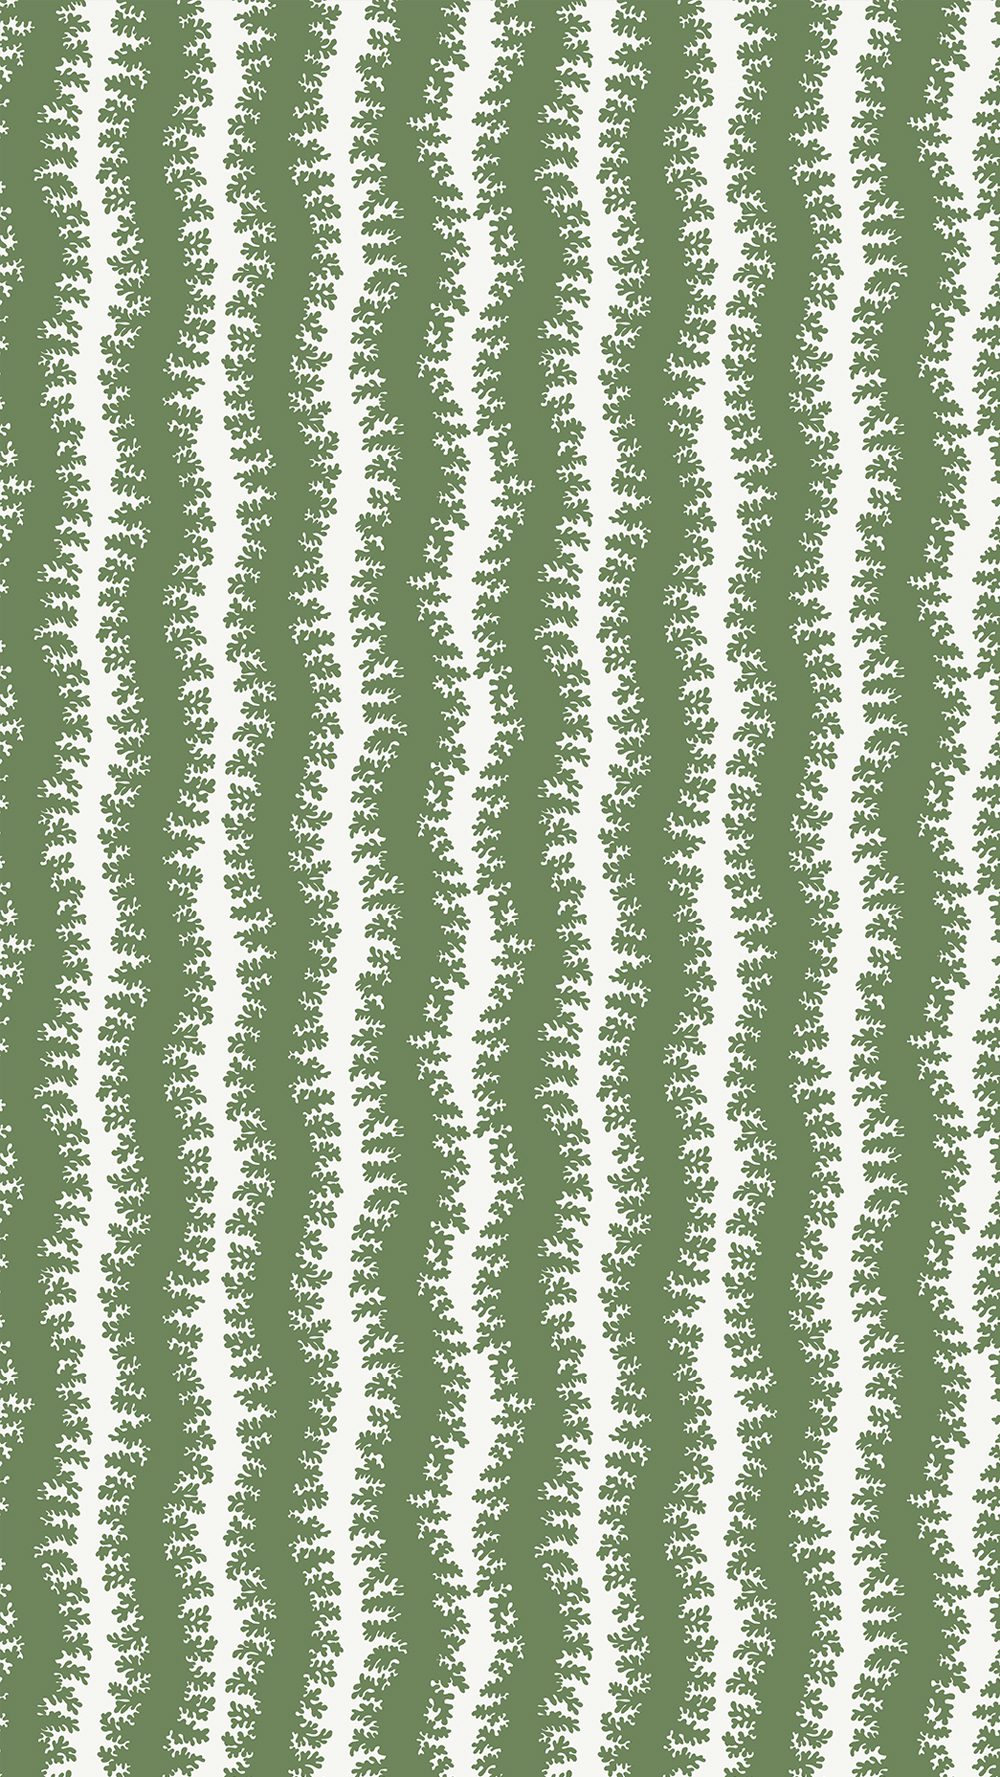 Josephine-Munsey-Roll-collection-wallpaper-elkhorn-strope-scalloped-wave-stripe-wallpaper-elkhork-edged-silhouette-soft-edged-wide-stripe-brooks-green-ceiling-white